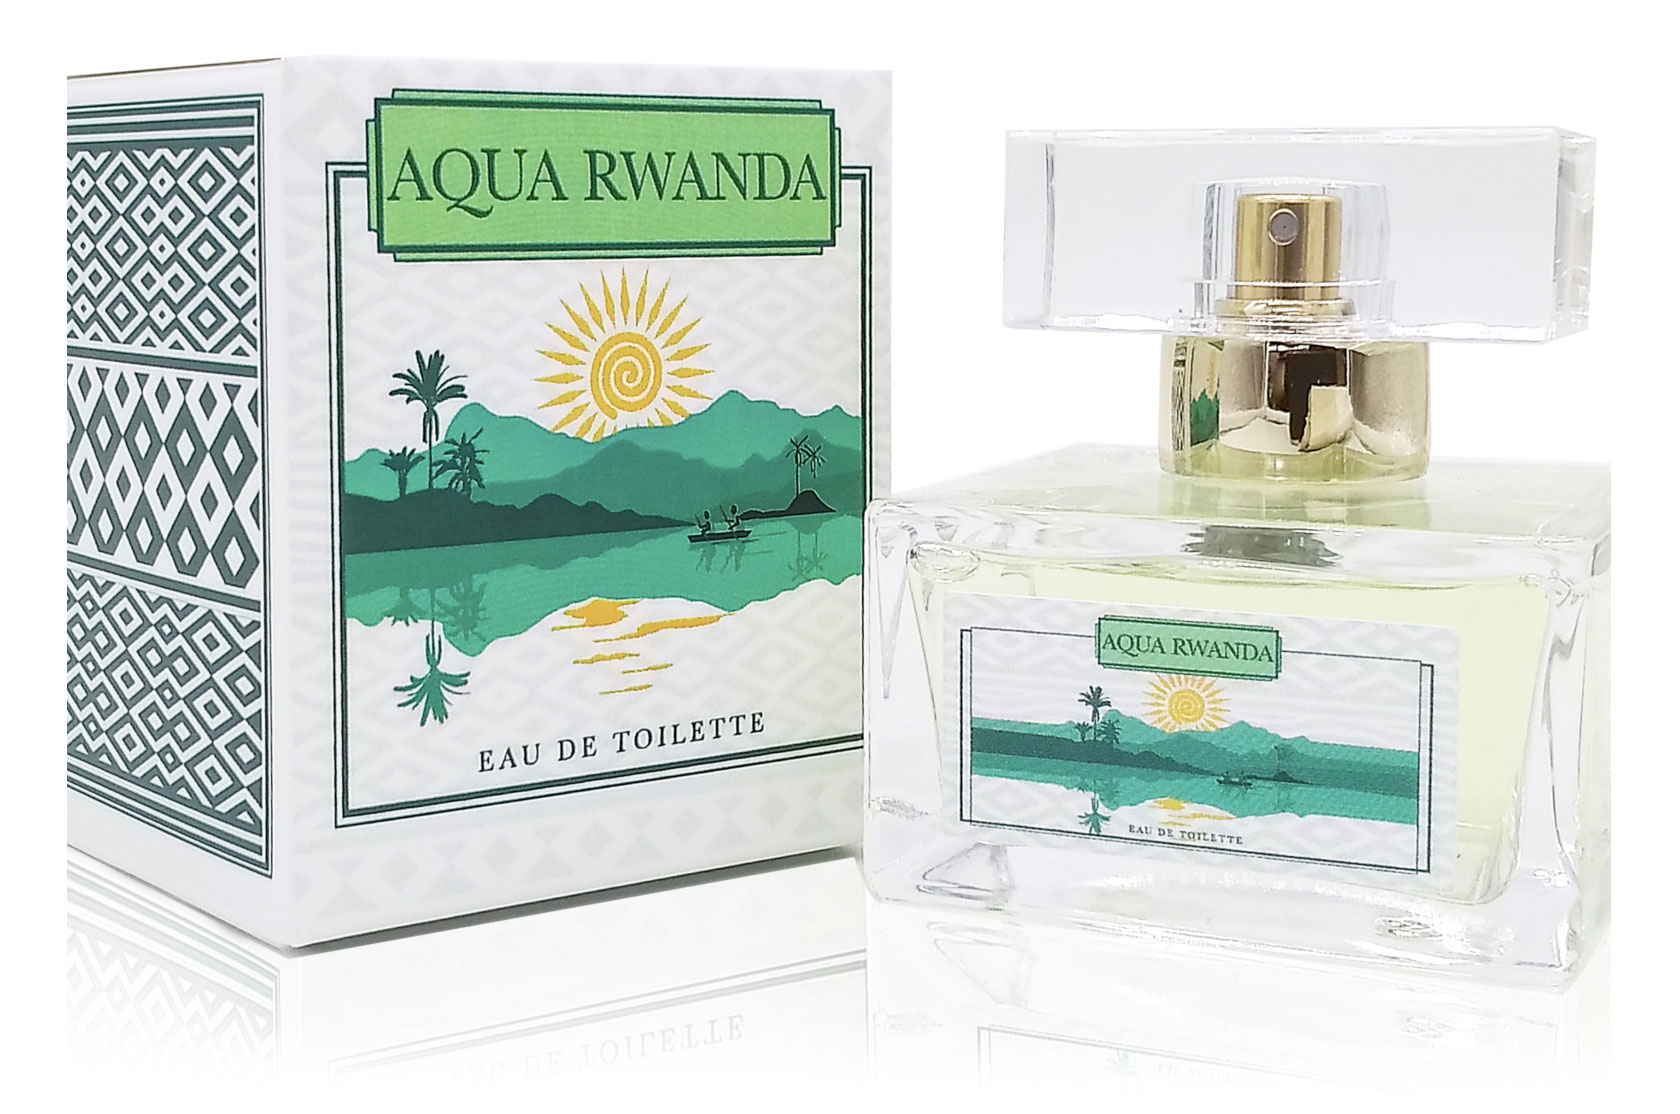 Aqua Rwanda flacon and box